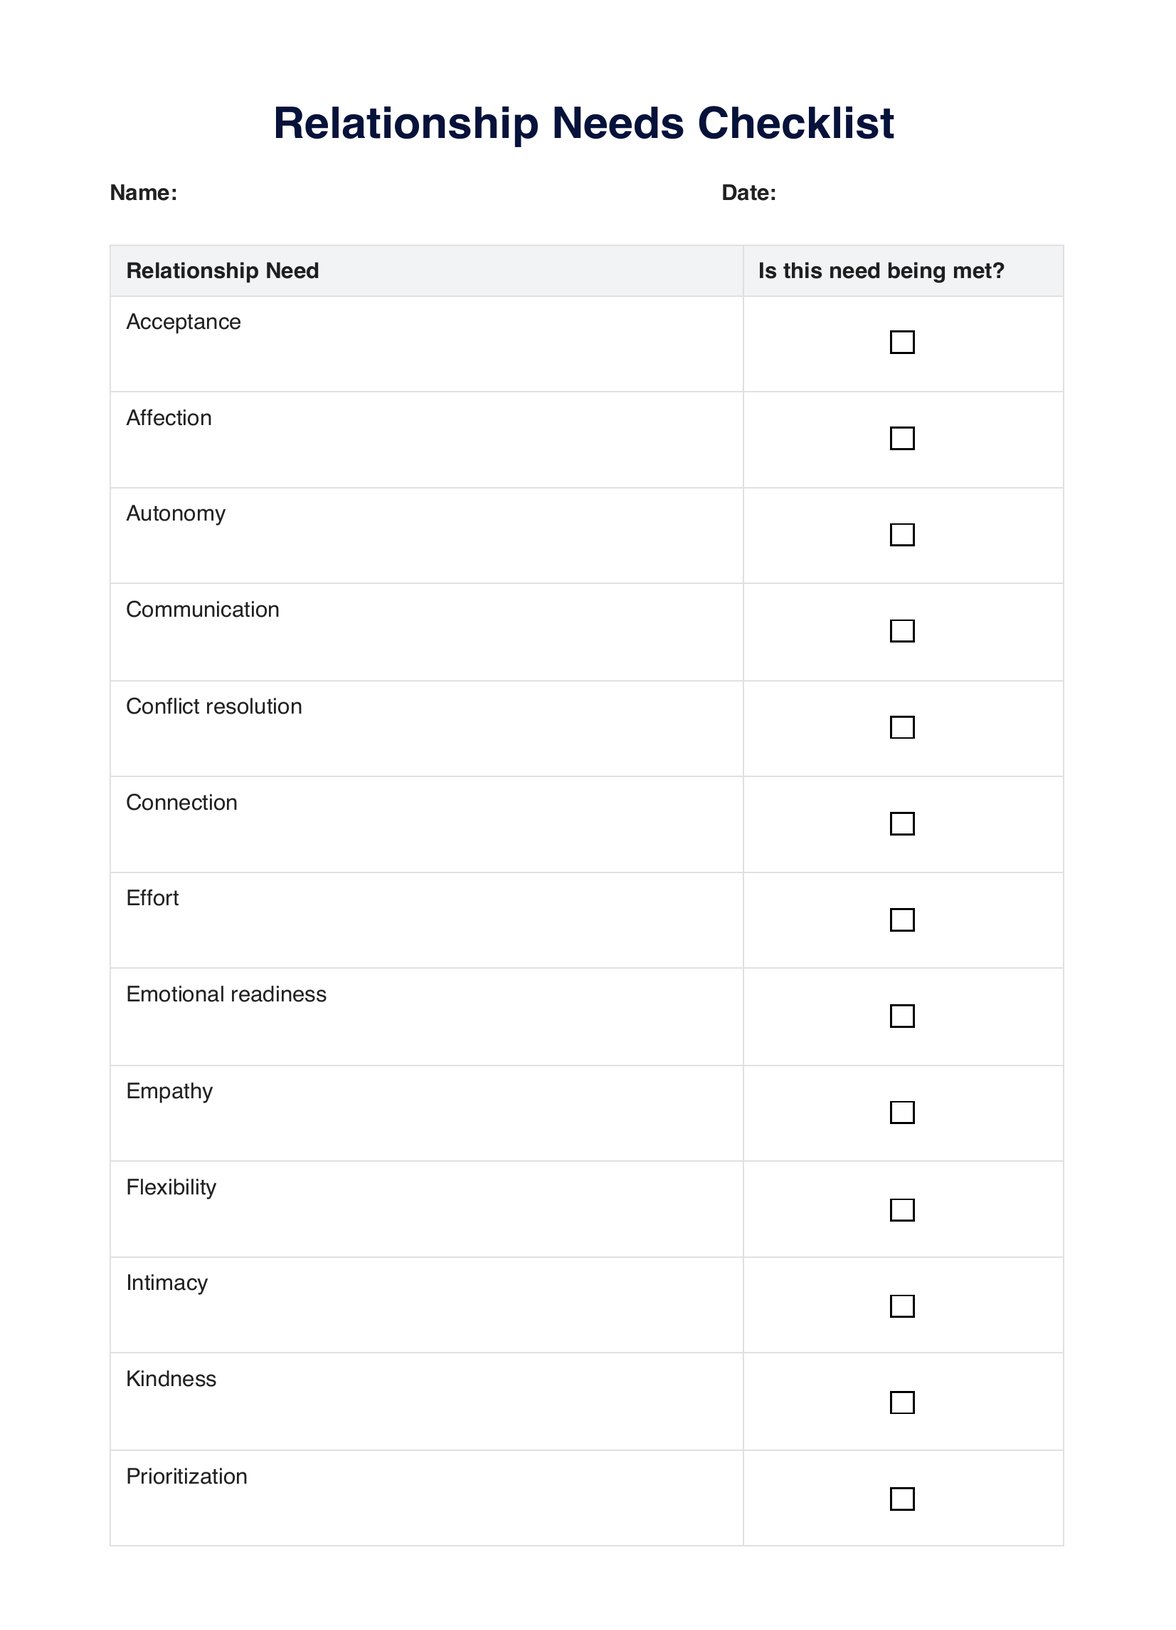 Relationship Needs Checklist PDF Example